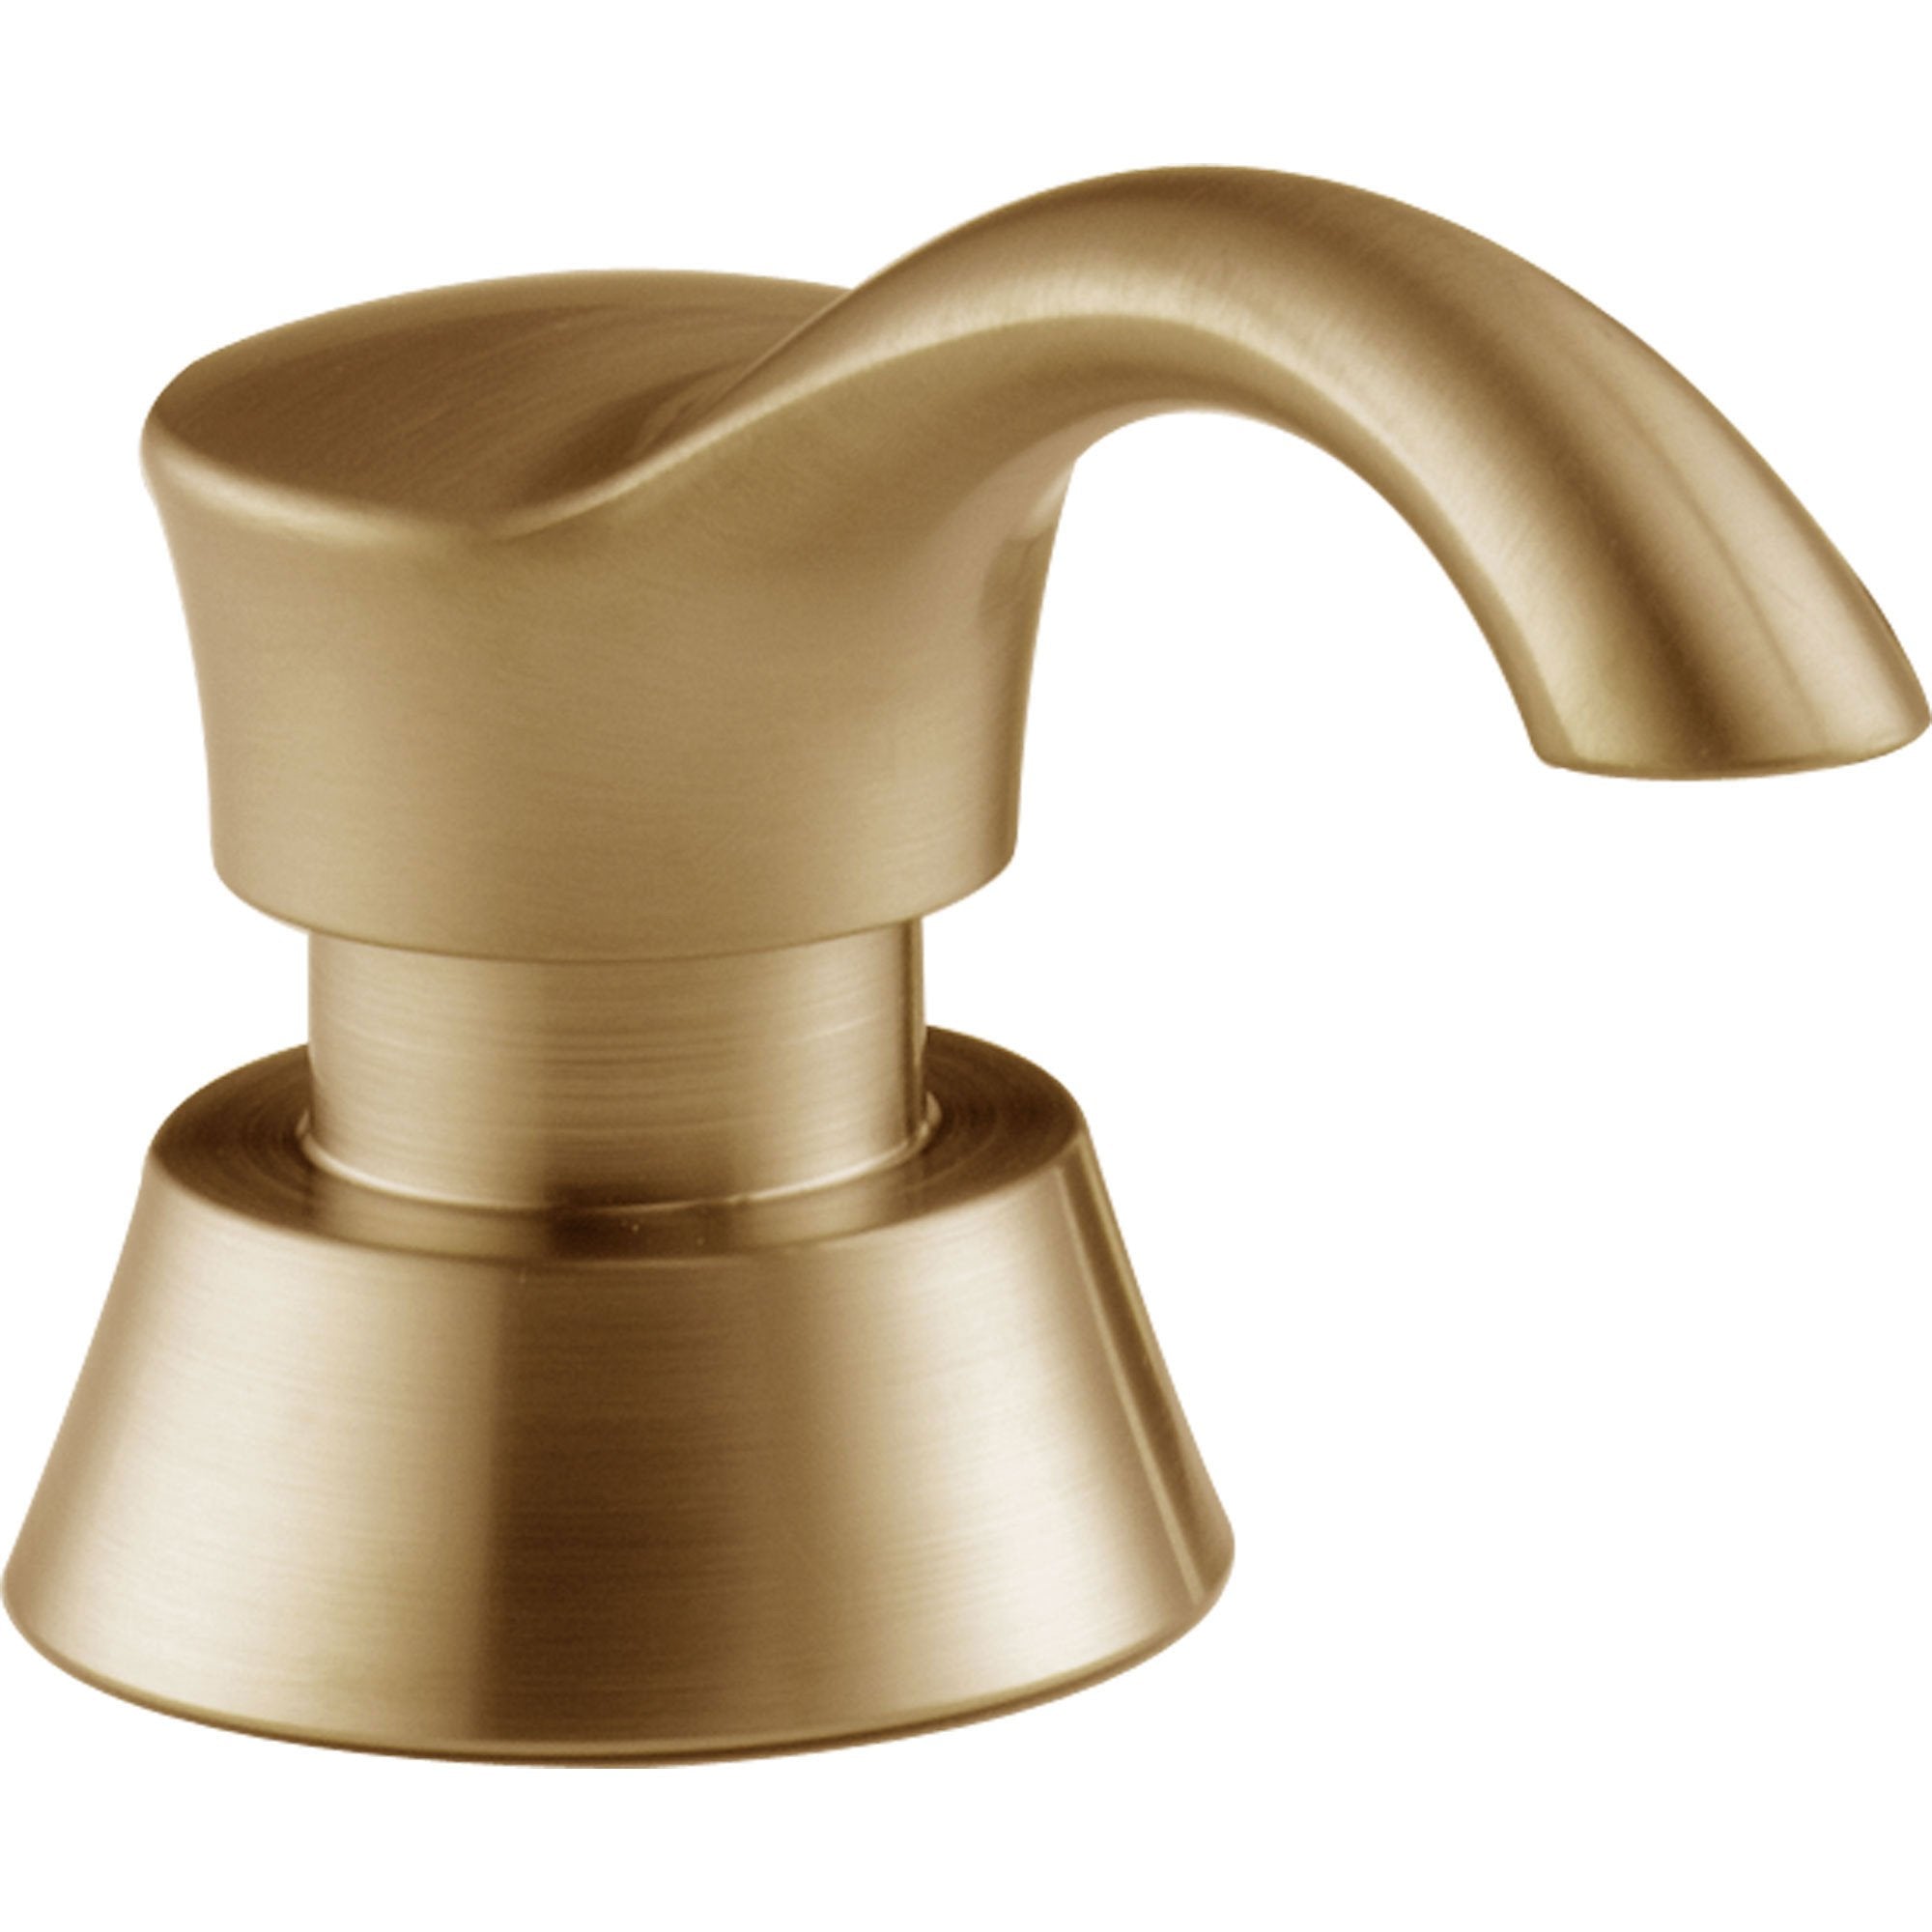 Delta Pilar Modern Champagne Bronze Deck Mount Soap and Lotion Dispenser 555870